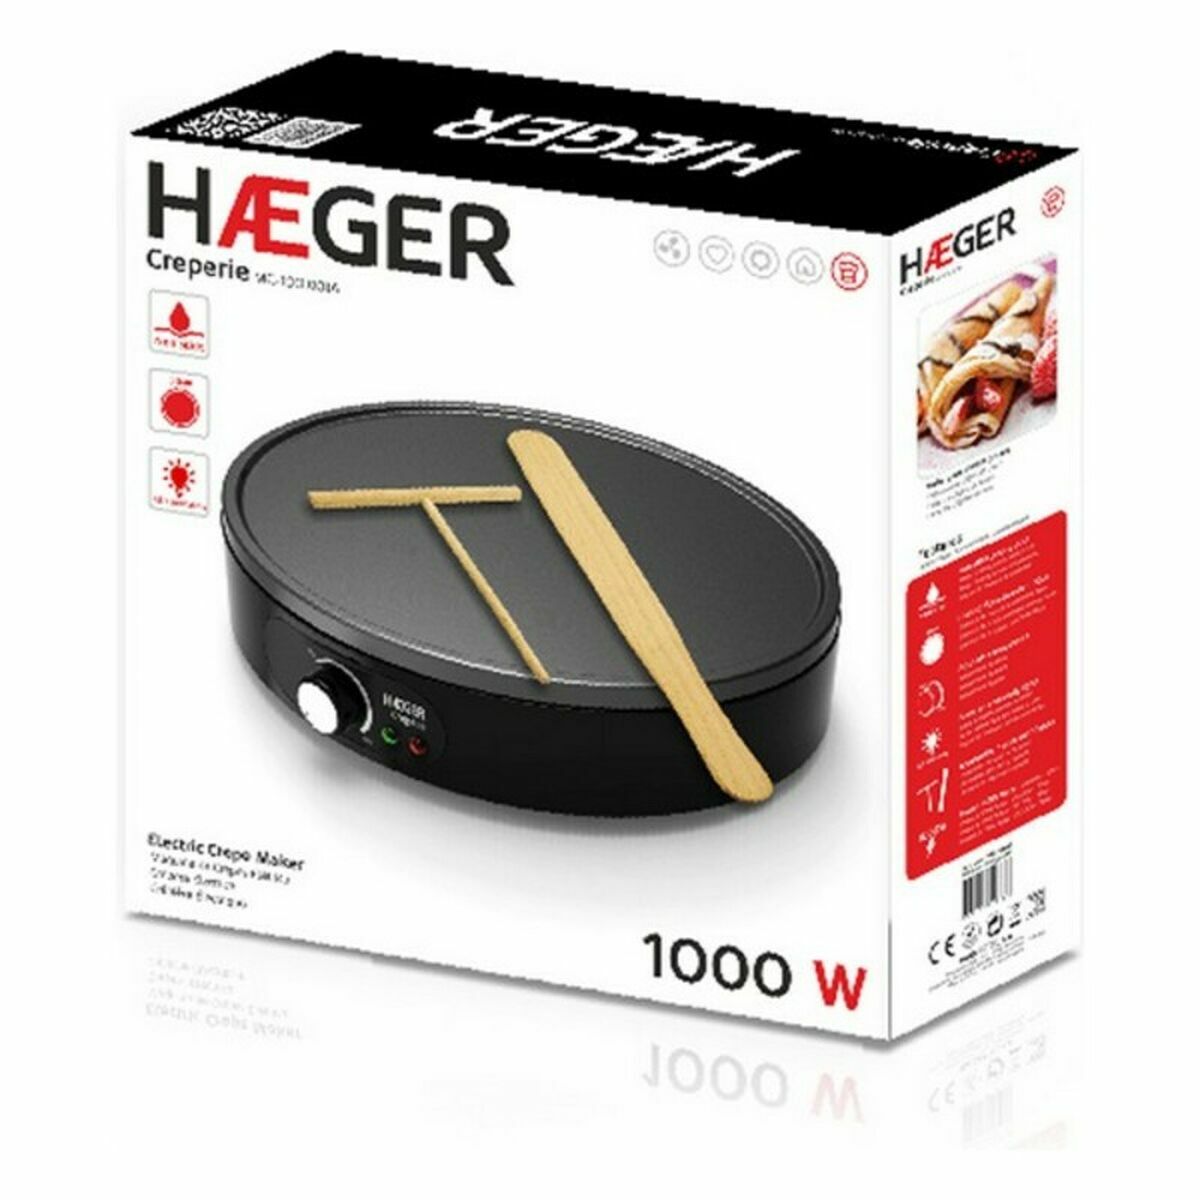 Crêpes-Maker Haeger MC-100.001A Schwarz 1000 W - CA International 